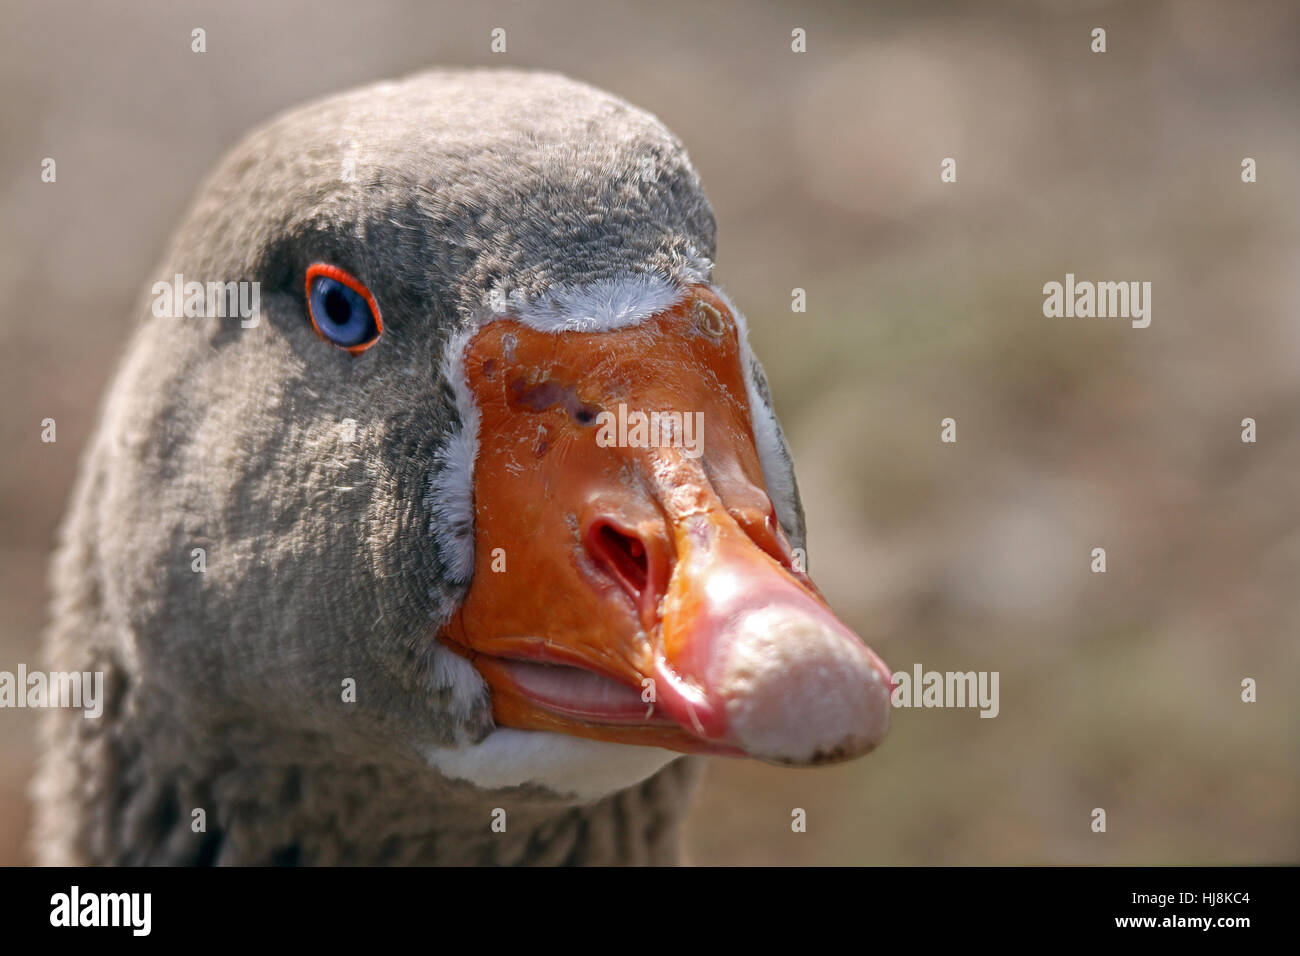 portrait, beak, goose, beaks, head, blue, bird, portrait, eye, organ, birds, Stock Photo